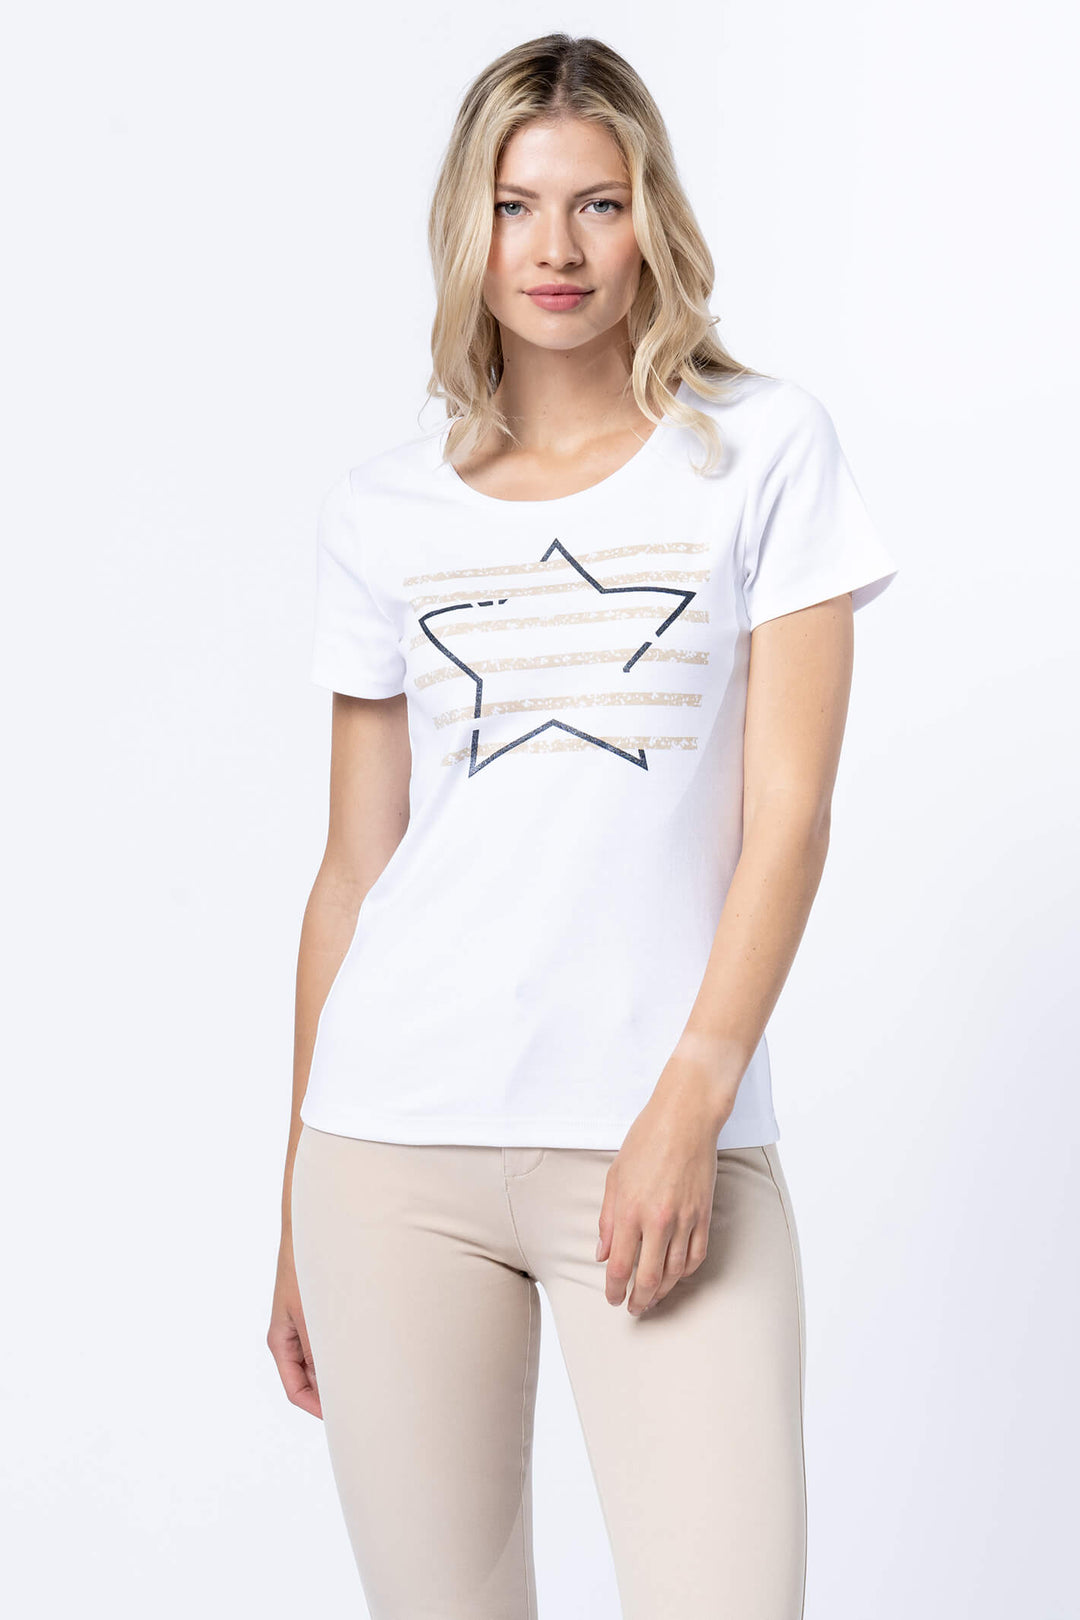 Marble 6532 185 White Star T-Shirt - Shirlaye Allum Boutique